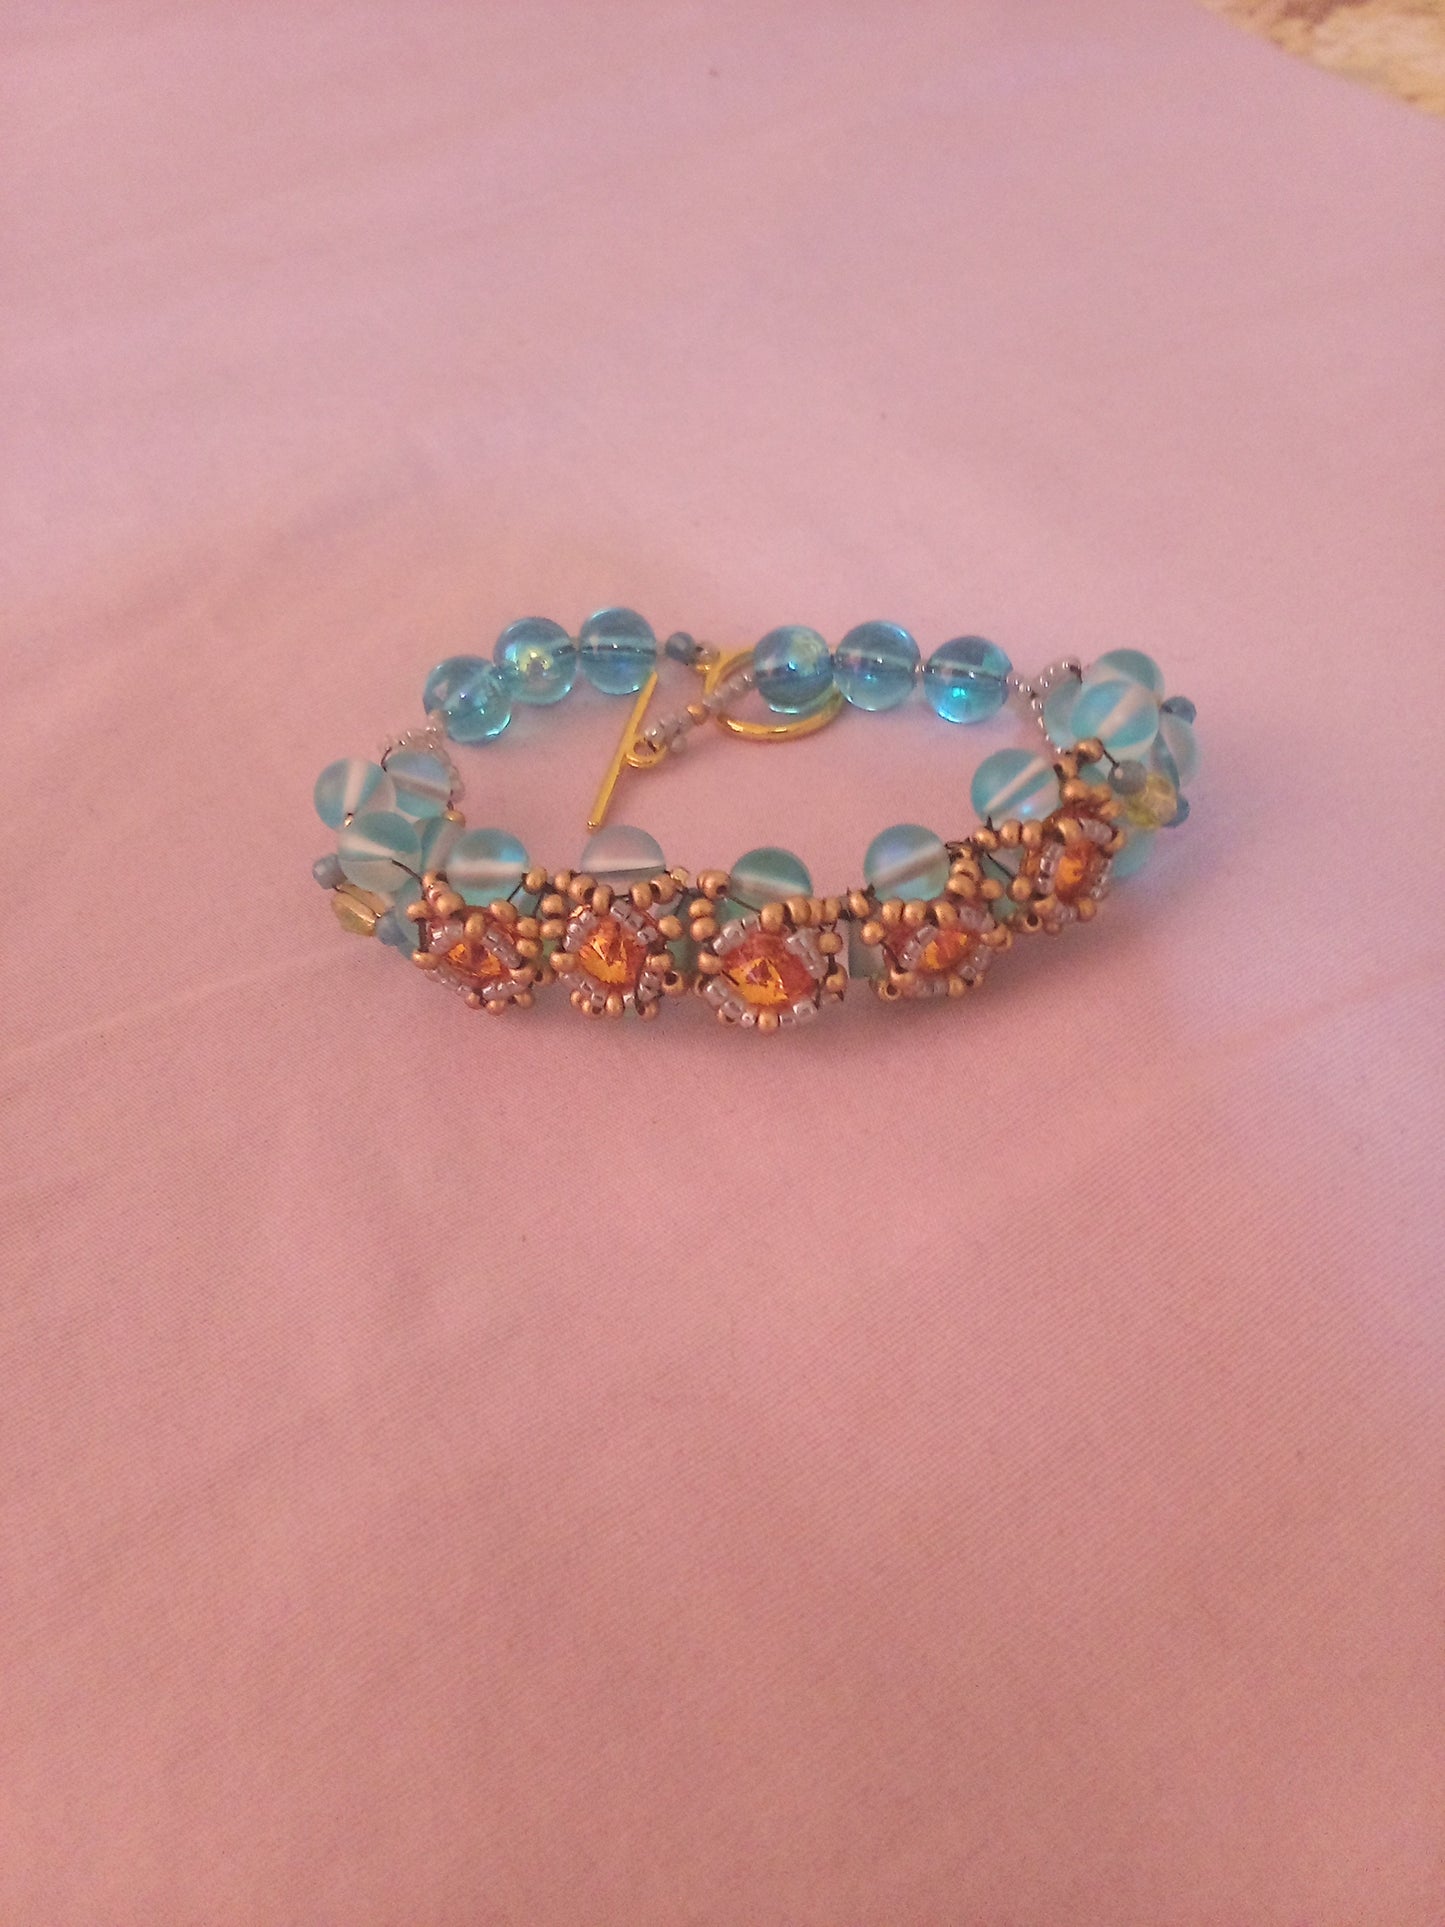 Blue Ocean bracelet